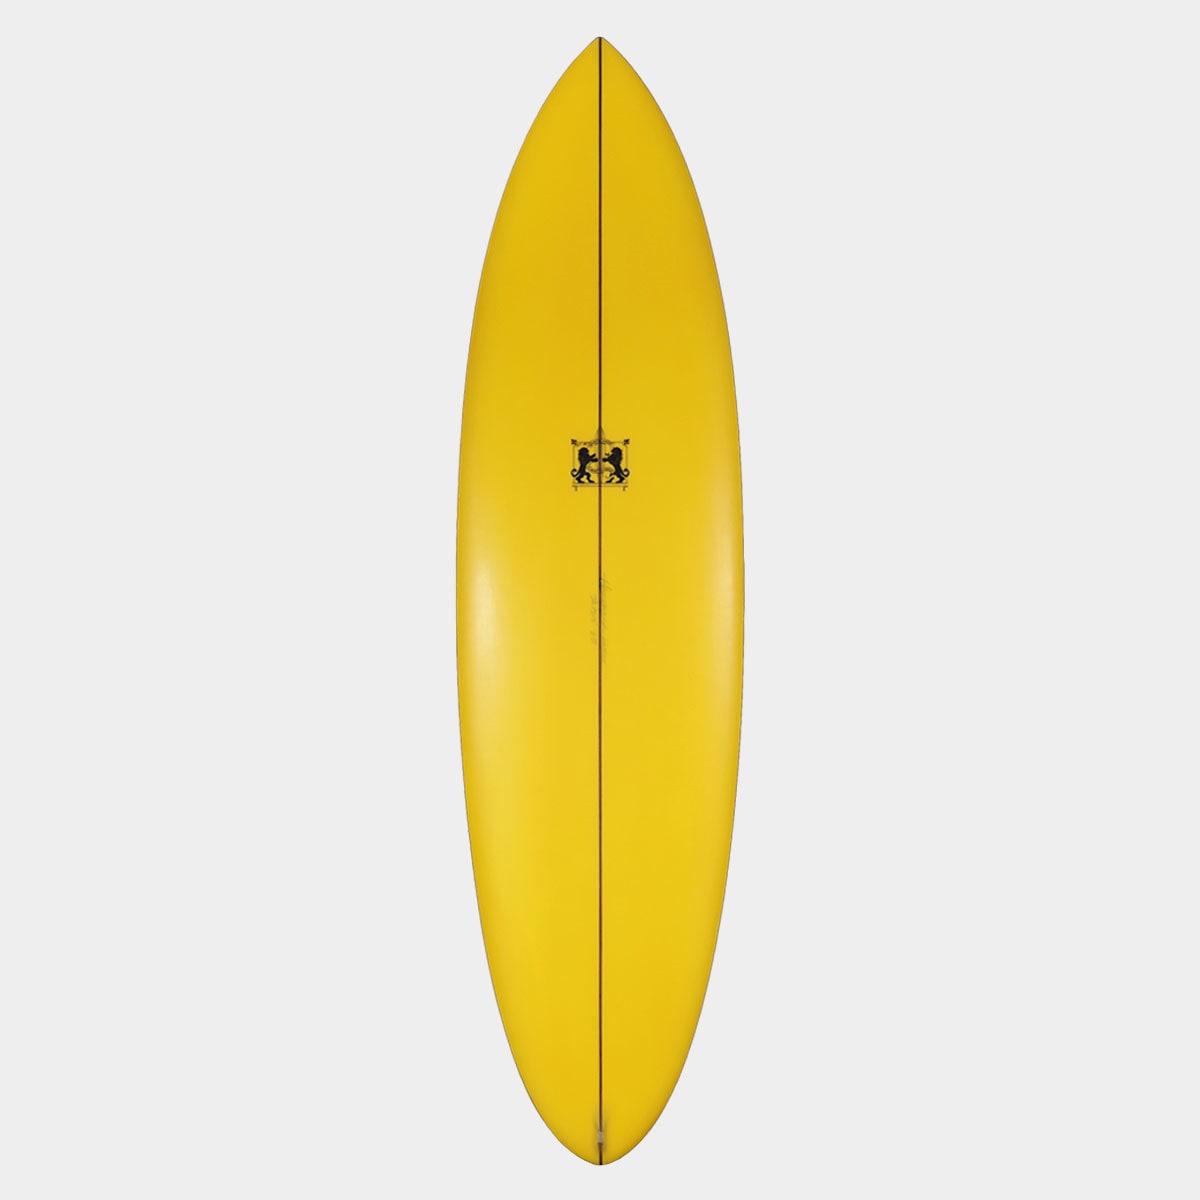 SurfBoardNet / リーシュコード ブランド:FREAK